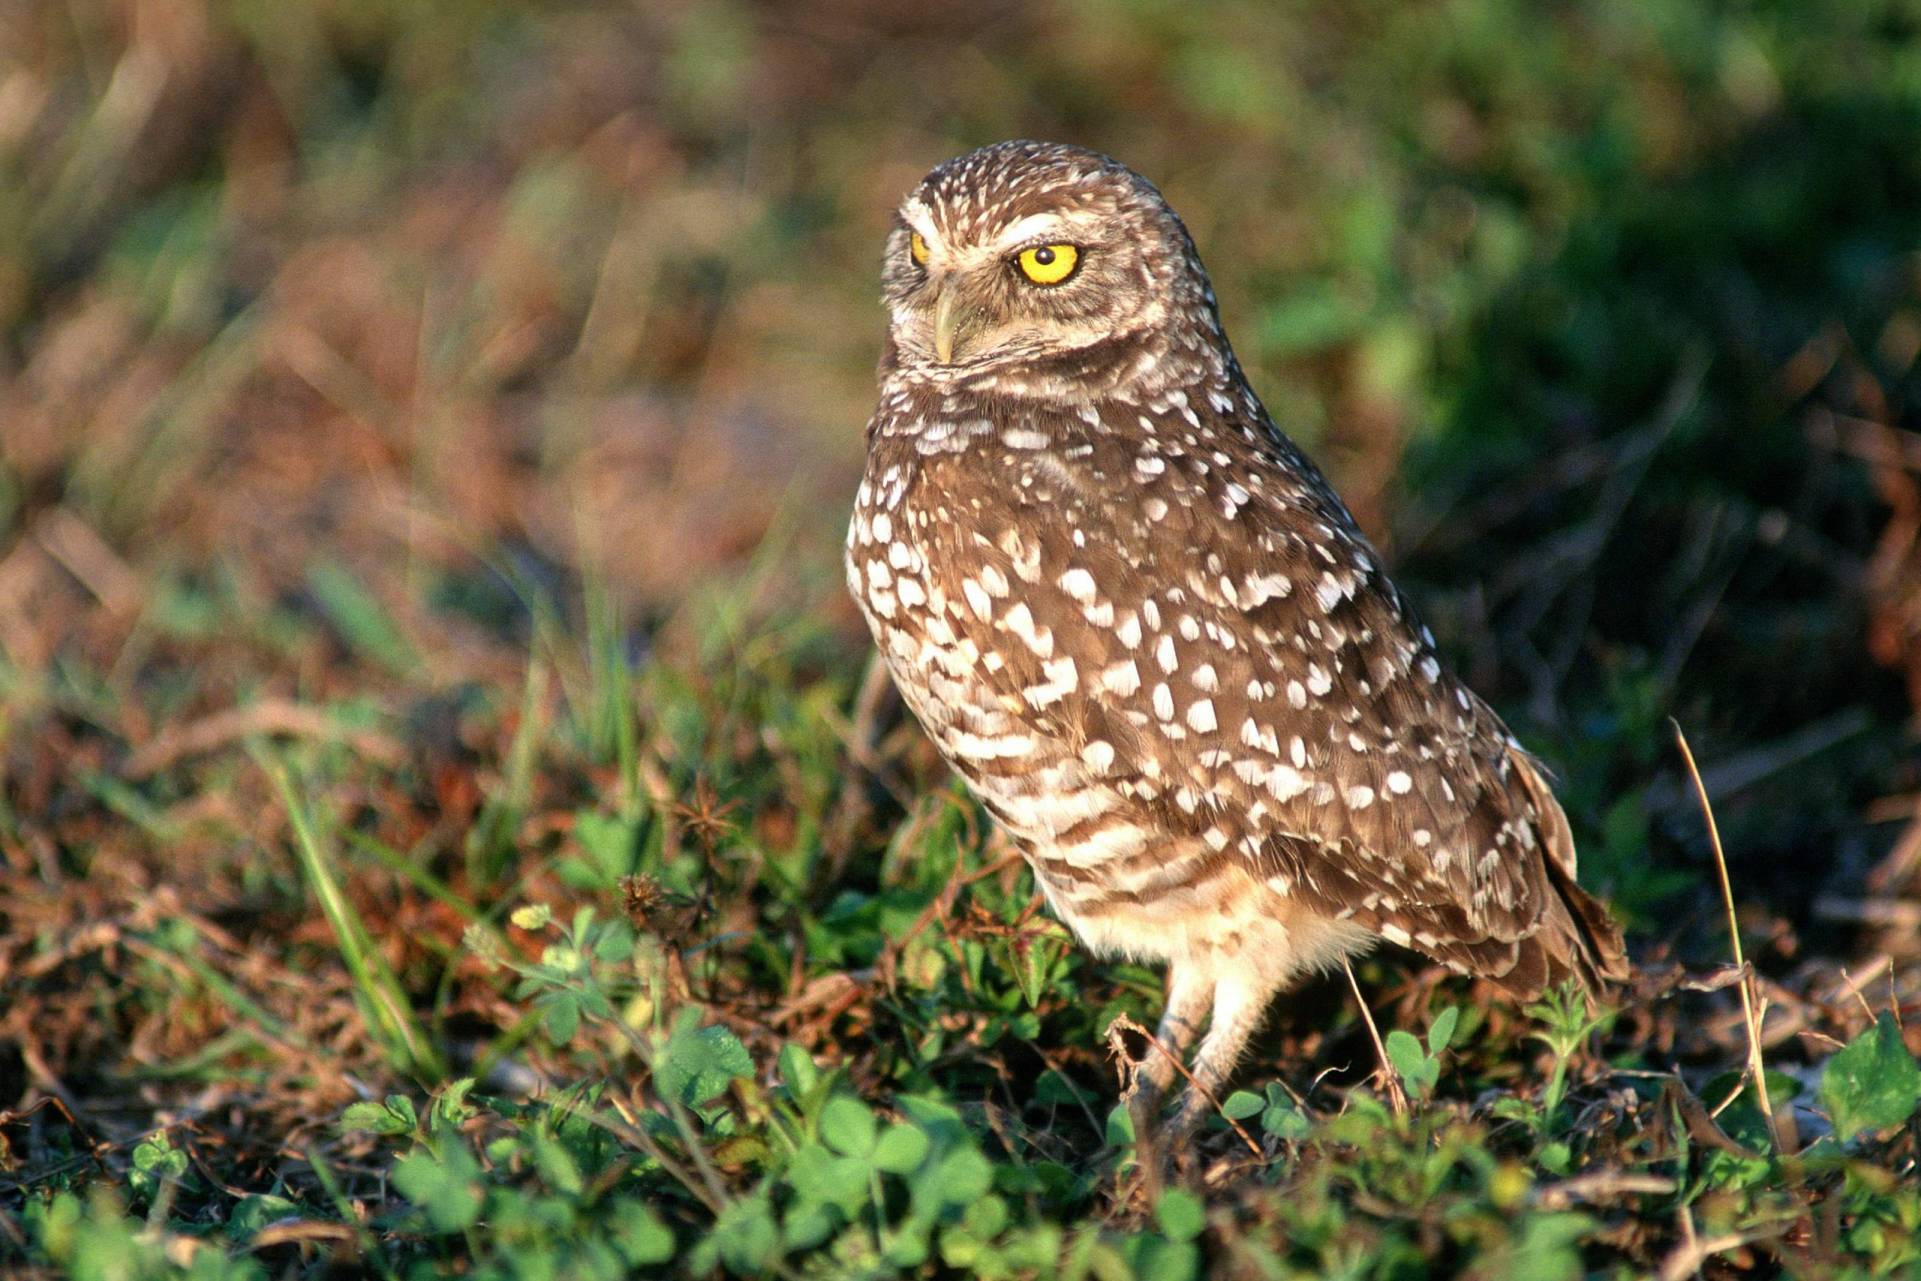 Burrowing owl standing in grass.|Burrowing owl standing in grass.|Burrowing owl standing in grass.